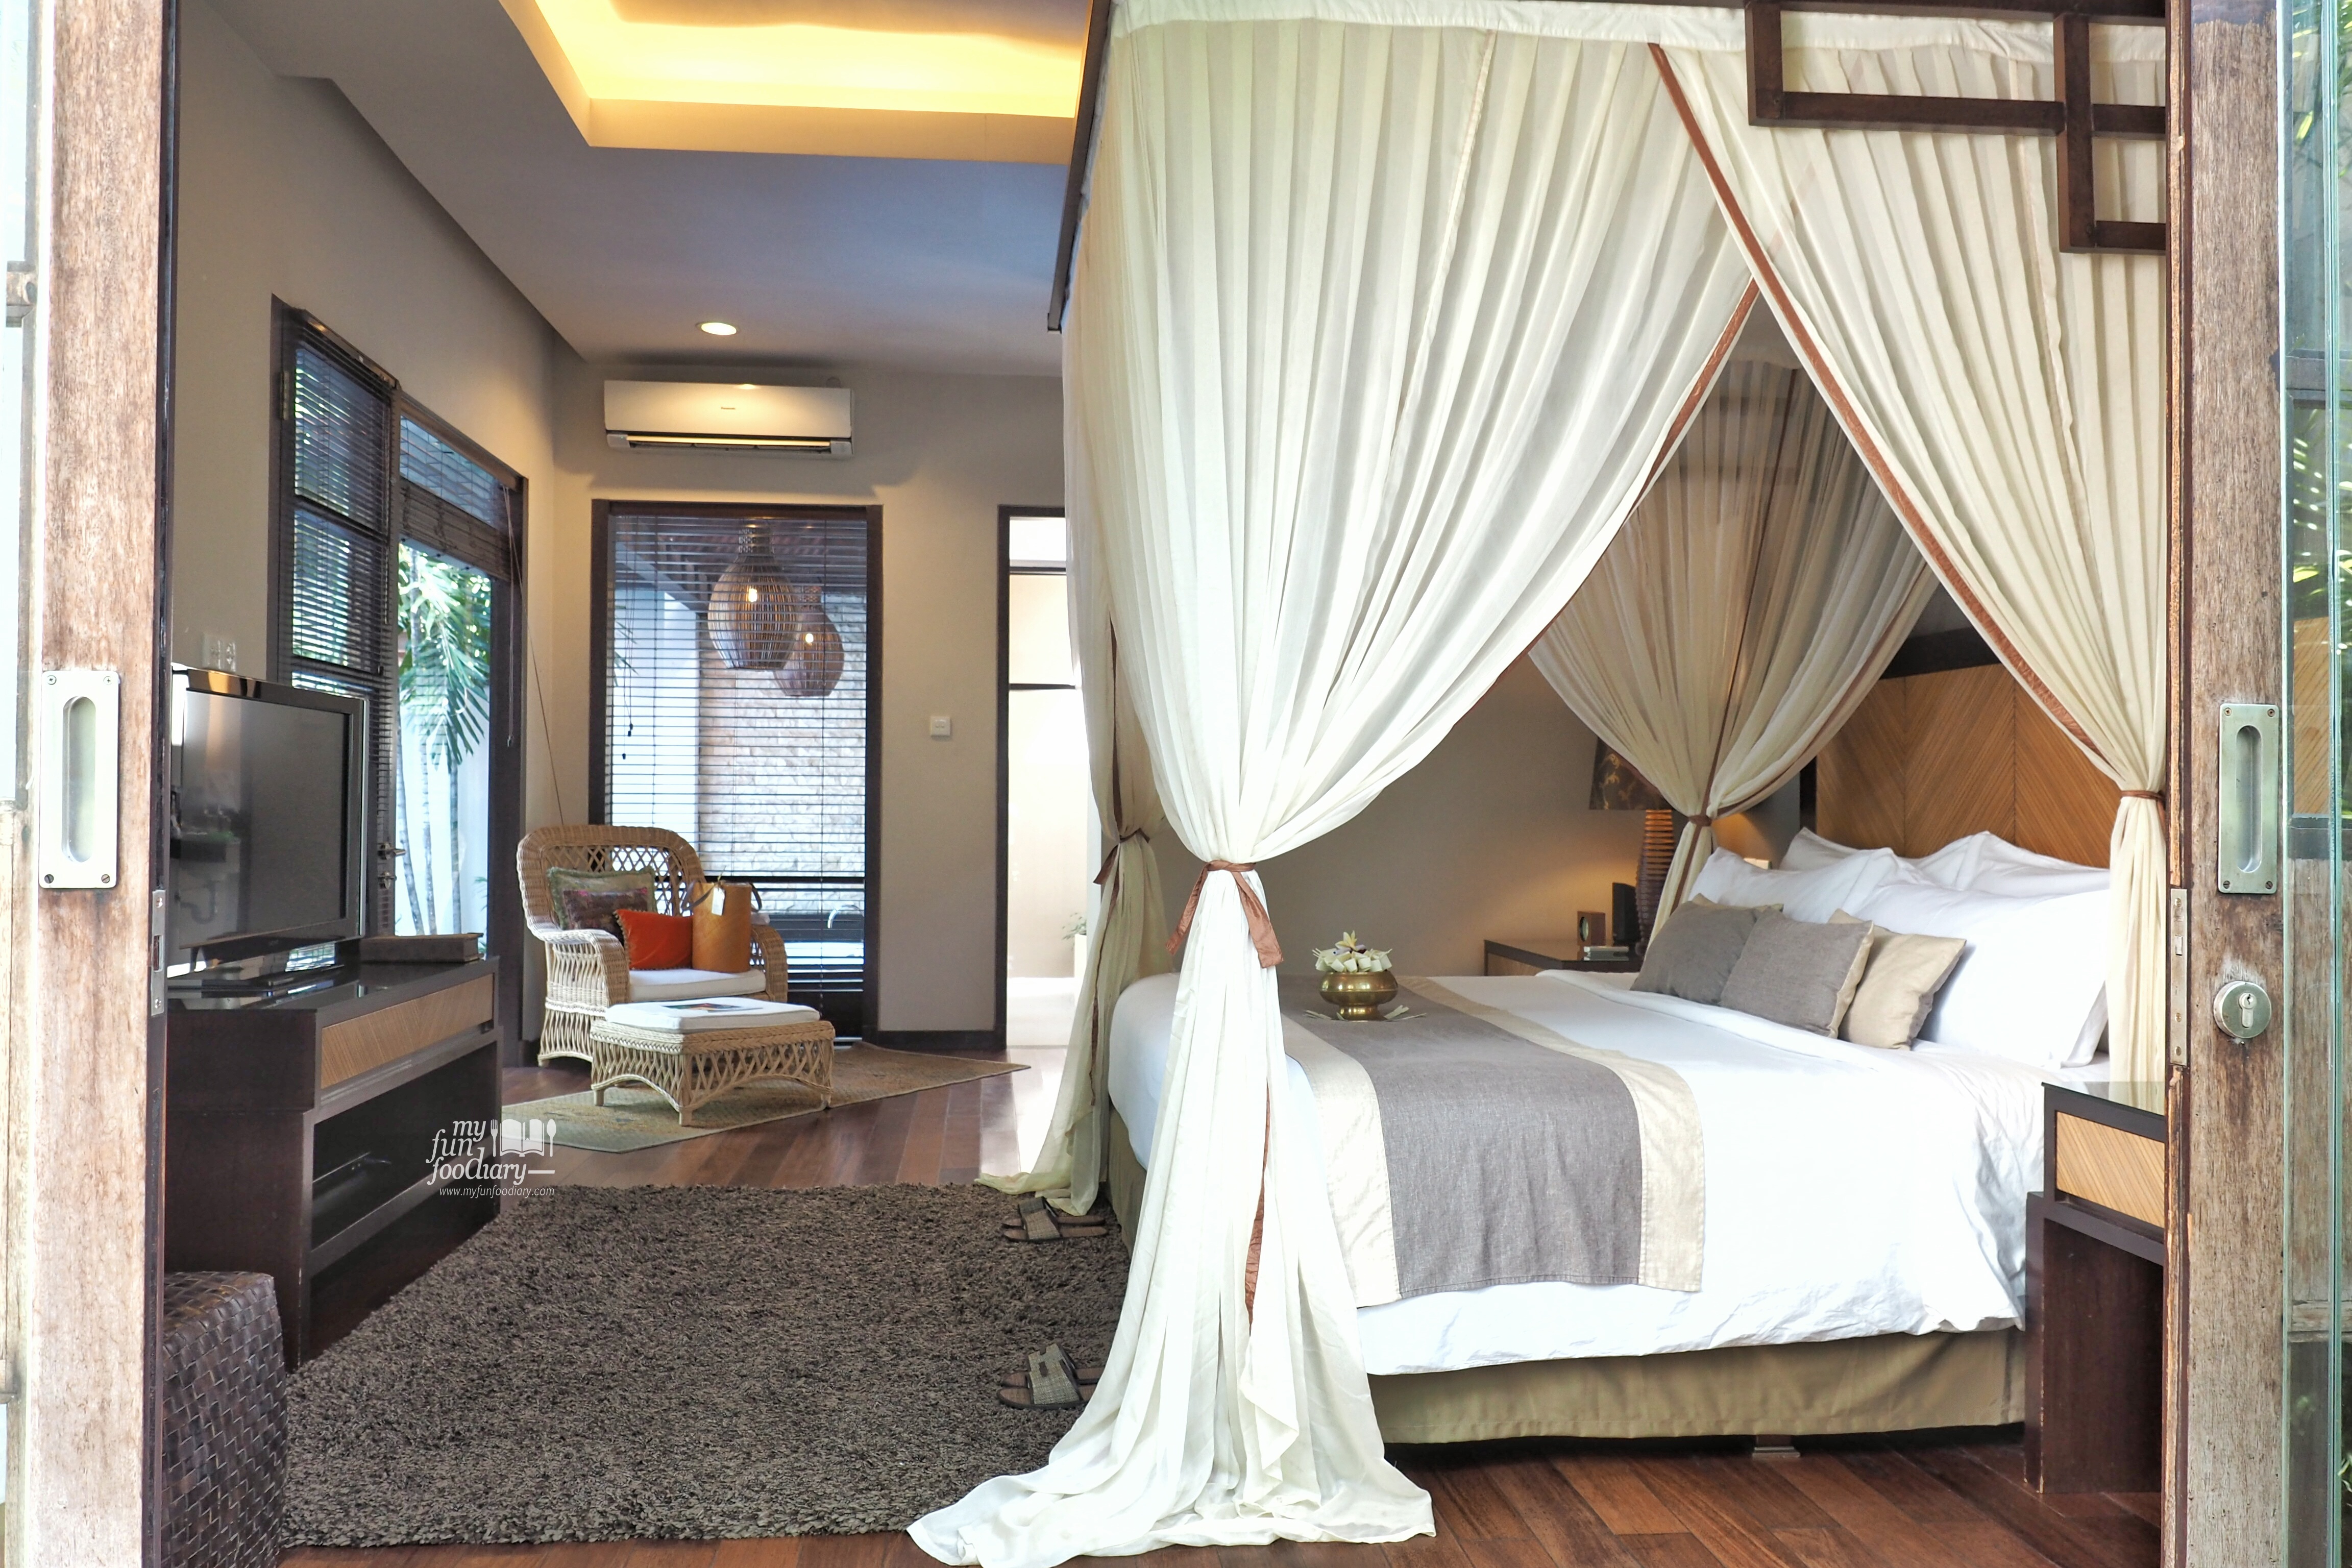 My bed room in my private villa - Villa De Daun Kuta Bali by Myfunfoodiary